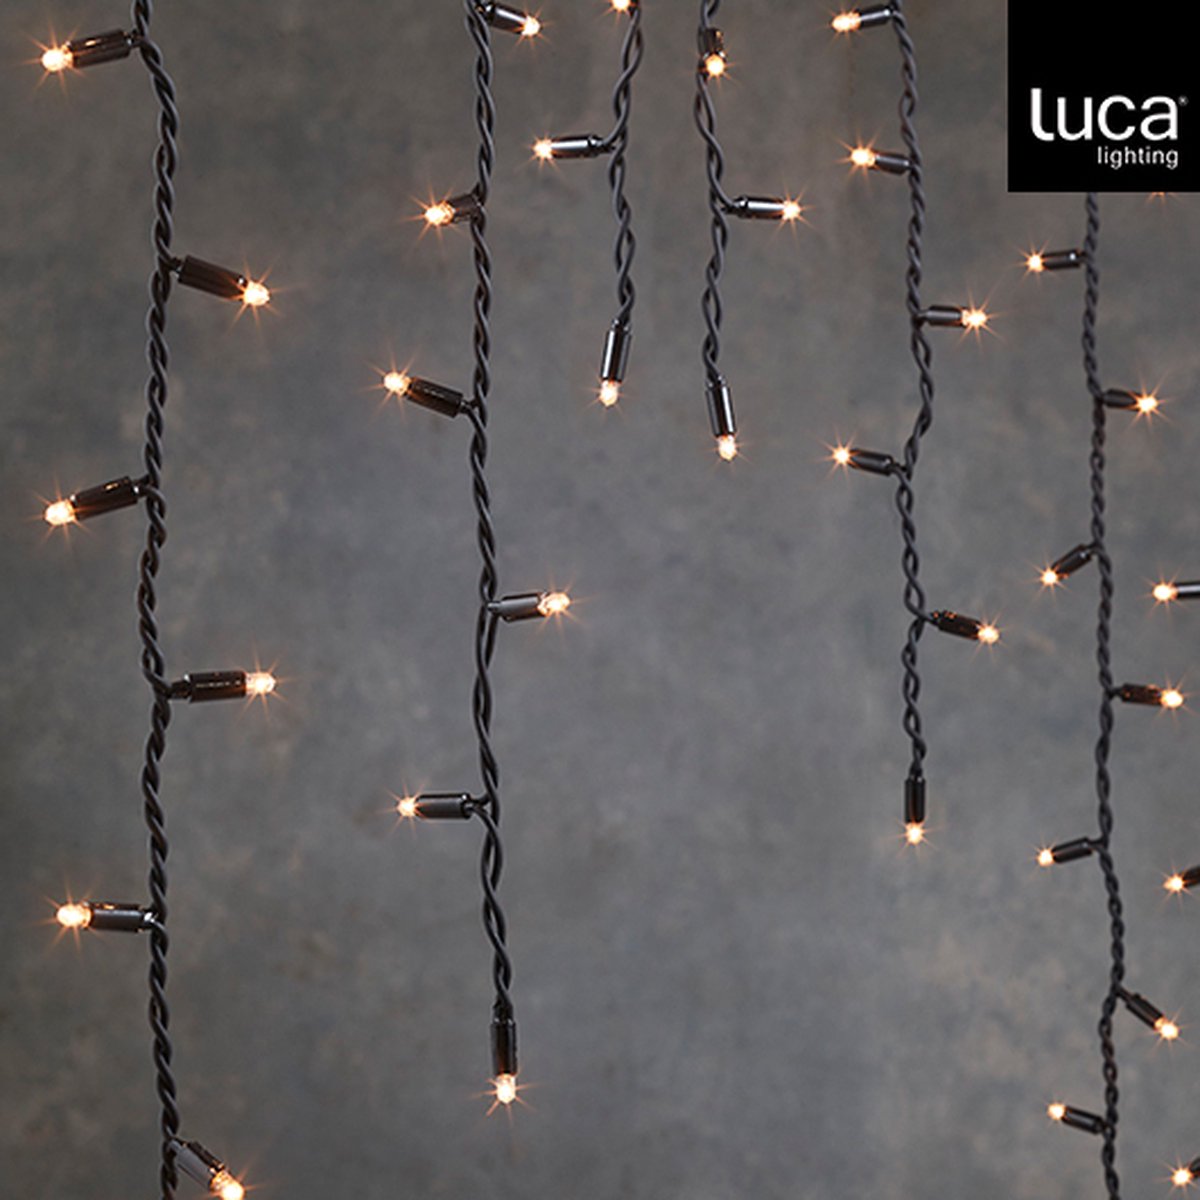 Luca Lighting - Connect 24 icicle warm wit 98 led extra - l200xh100cm - Woonaccessoires en seizoensgebondendecoratie  (Europese stekker ) - Luca lighting